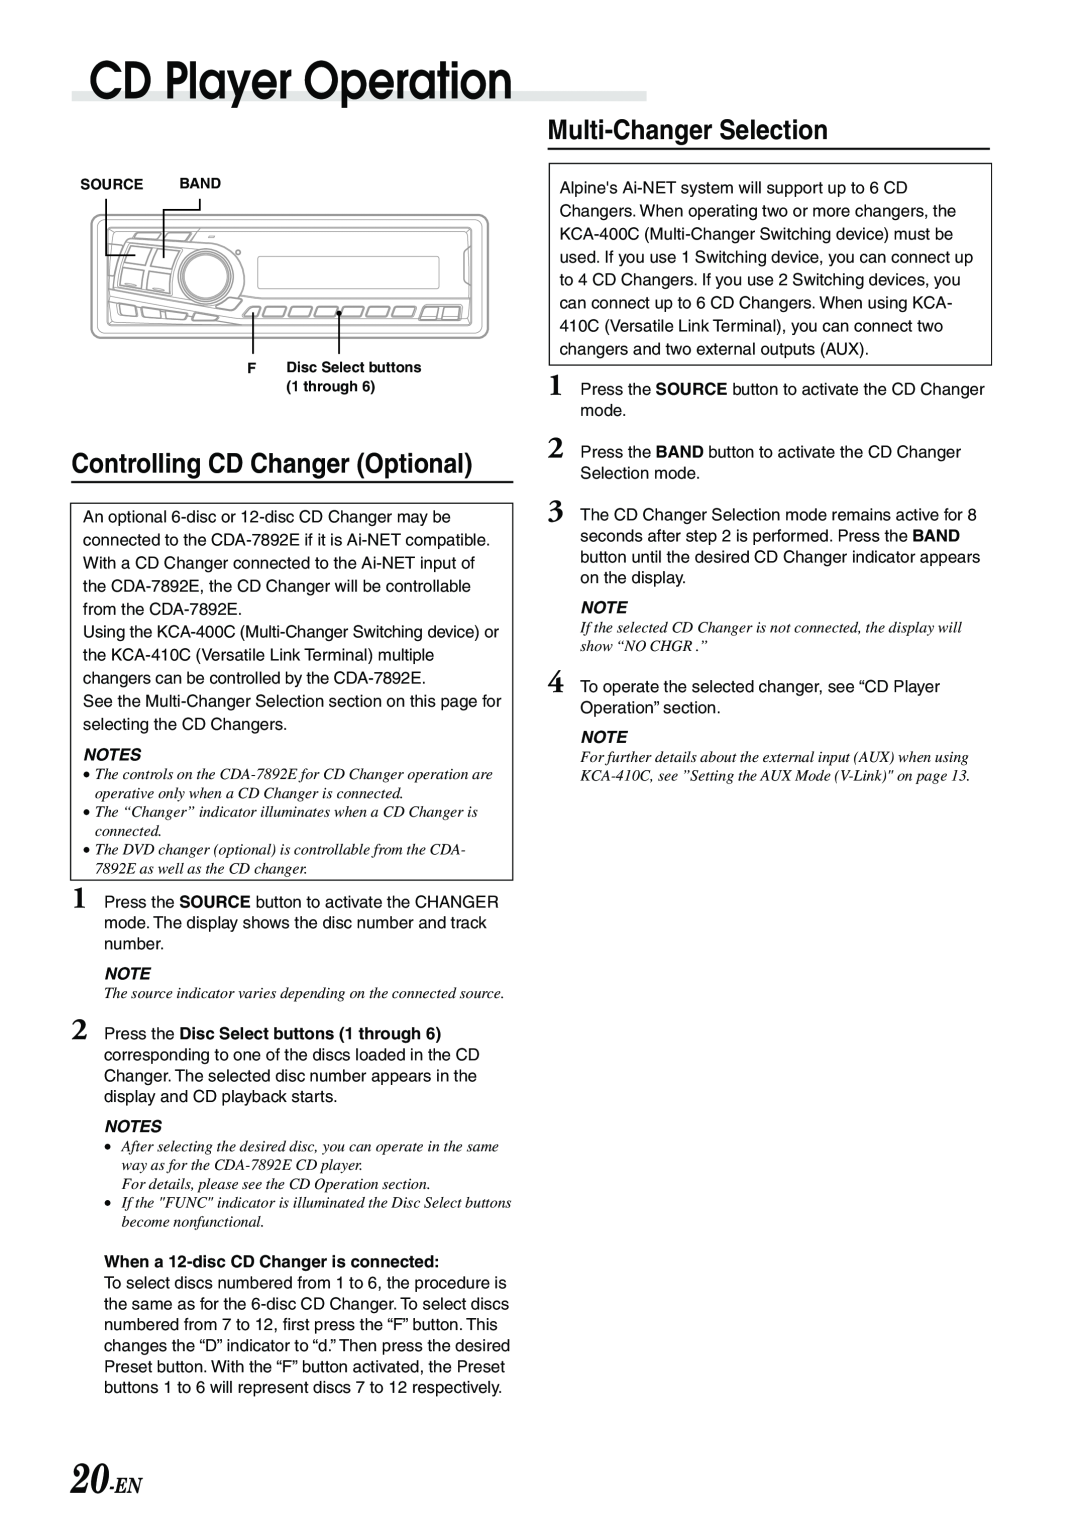 Alpine CDA-7892E owner manual Multi-ChangerSelection, Controlling CD Changer Optional, 20-EN, CD Player Operation 